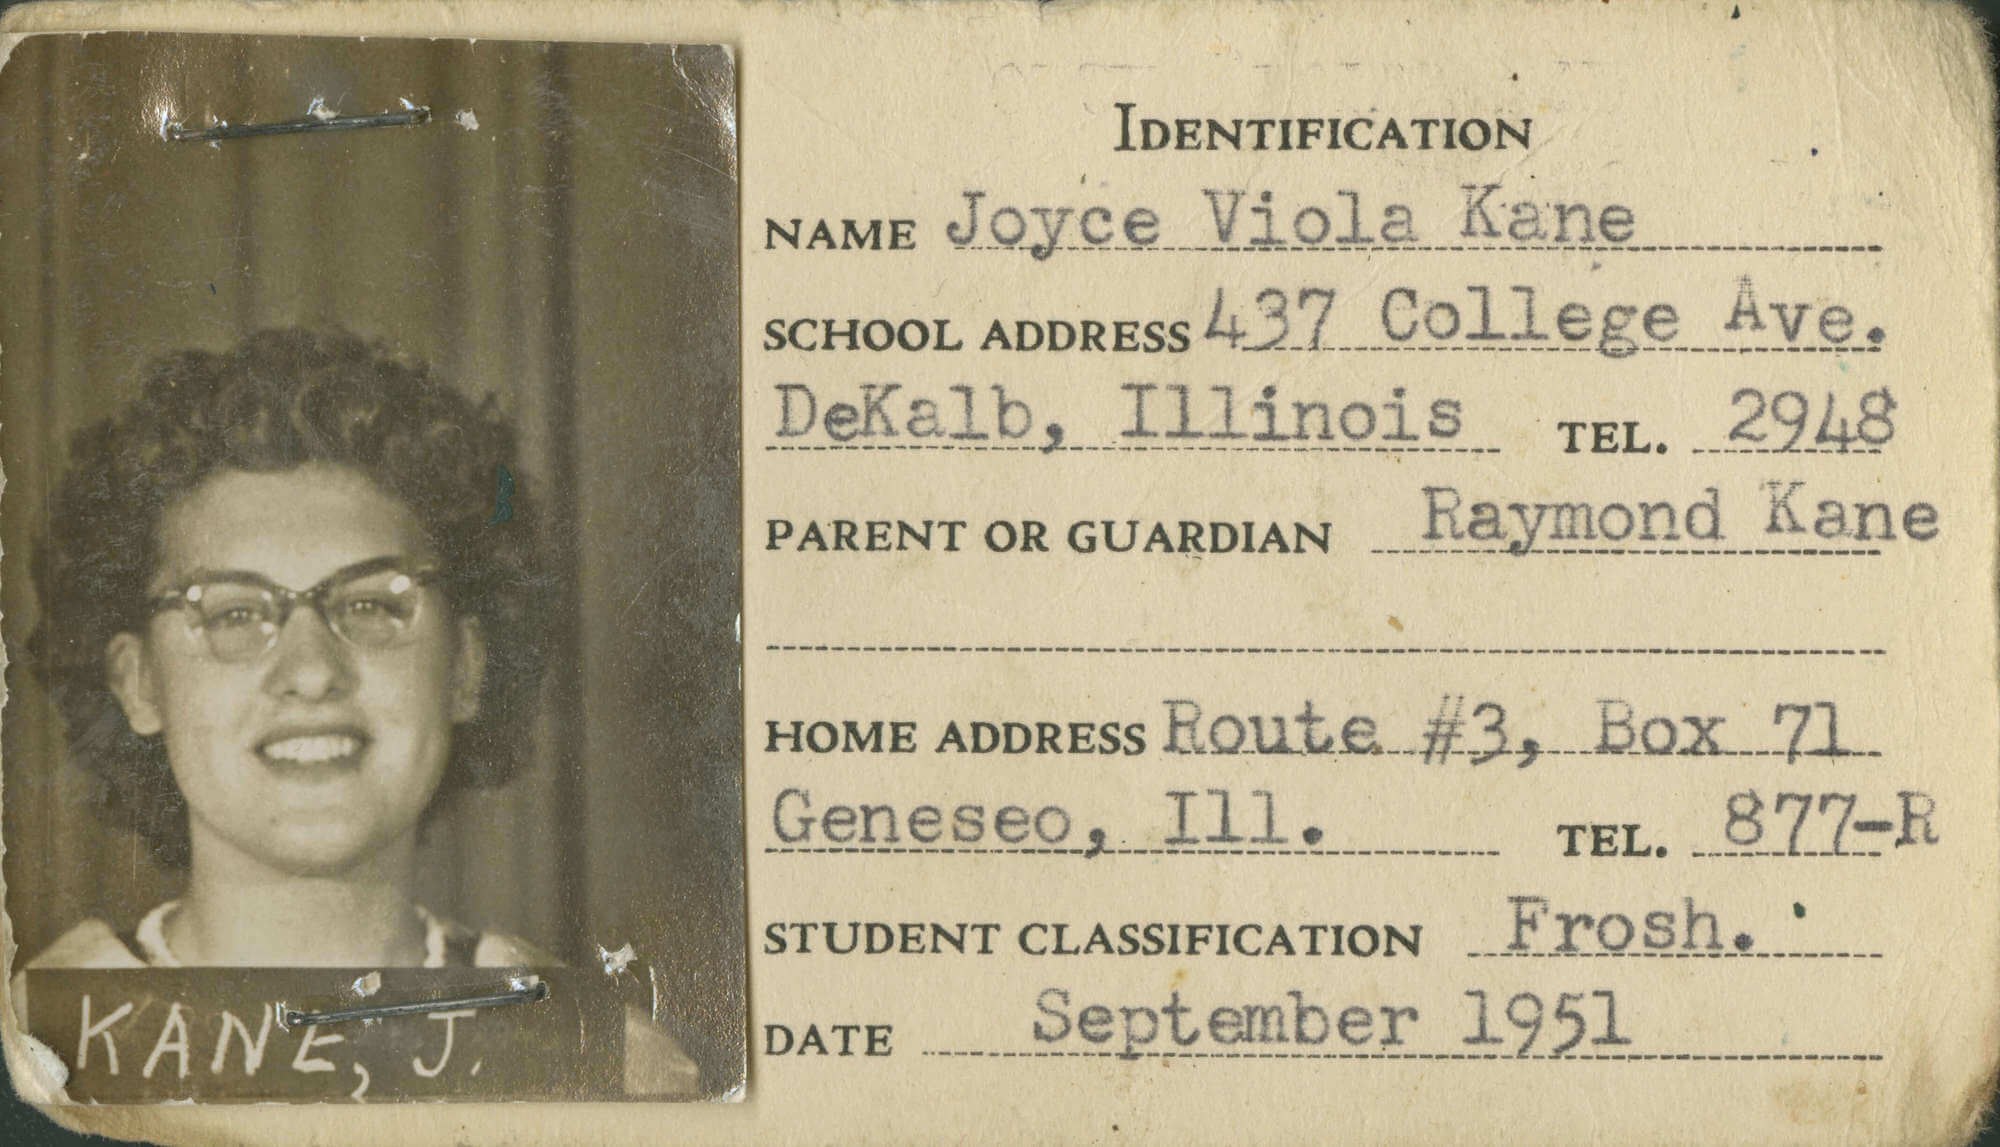 Joyce DeFauw's original 1951 NIU identification card.